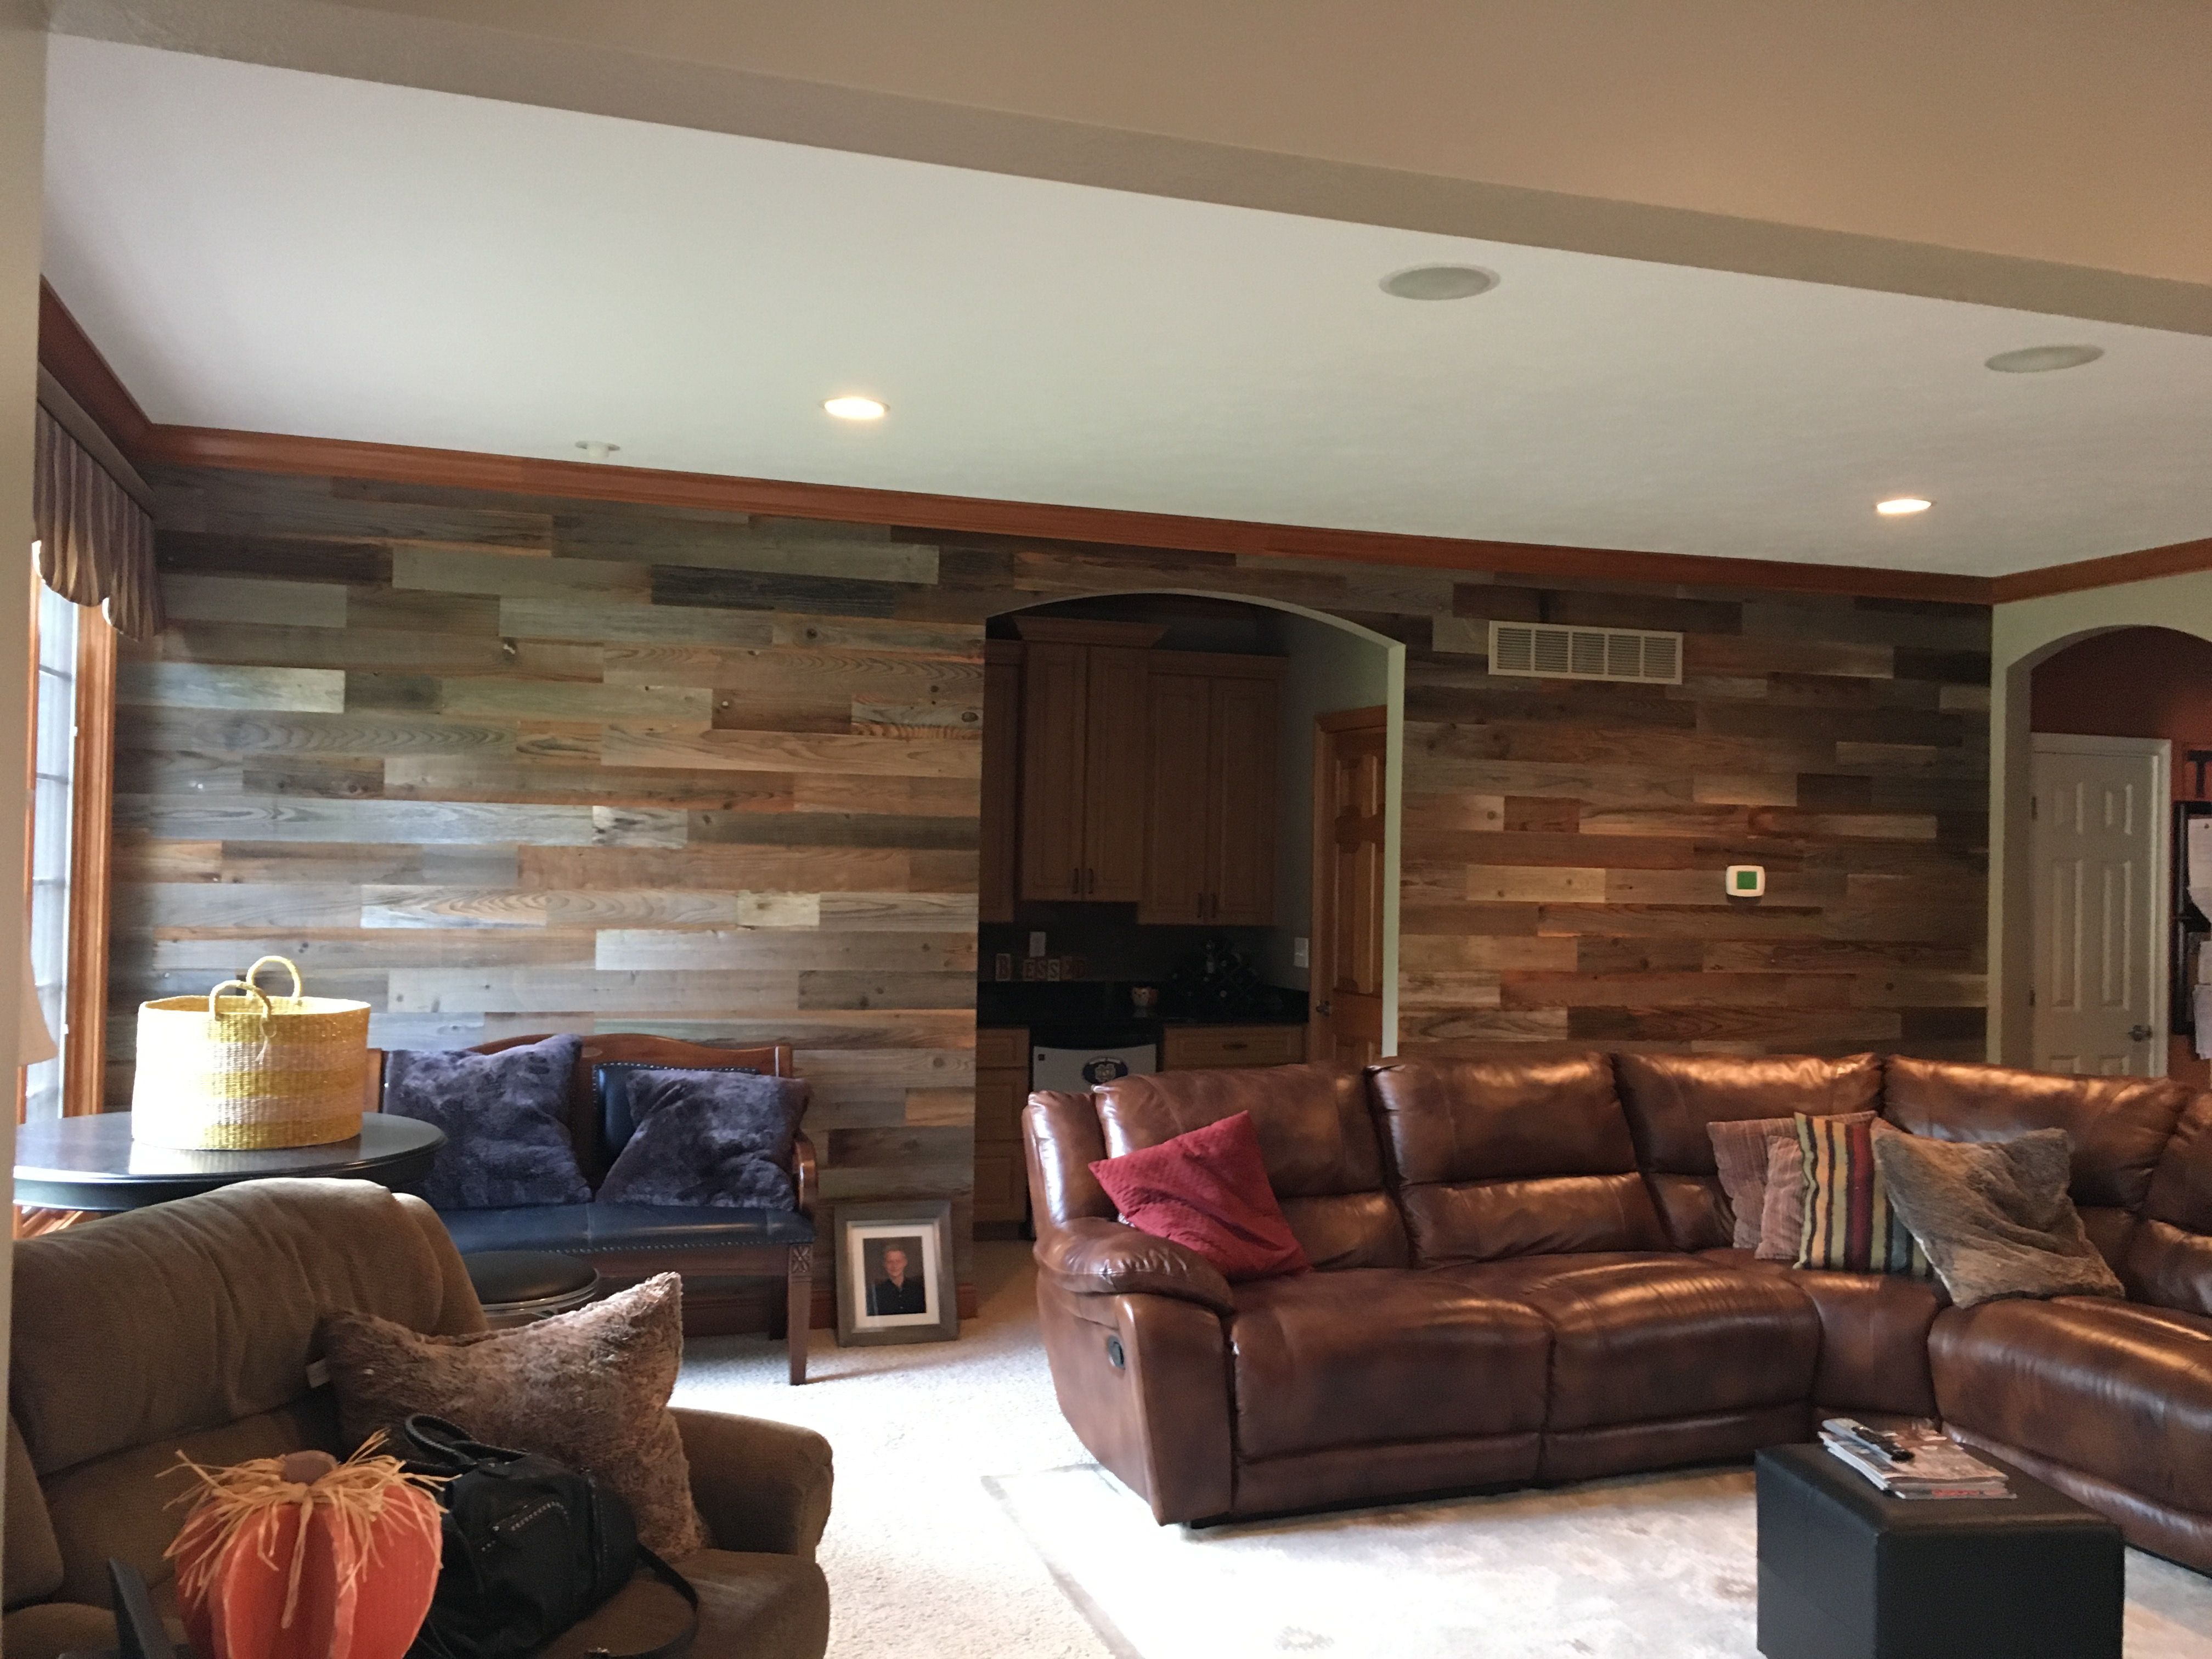 Transform Your Living Room Into A Home Sanctuary